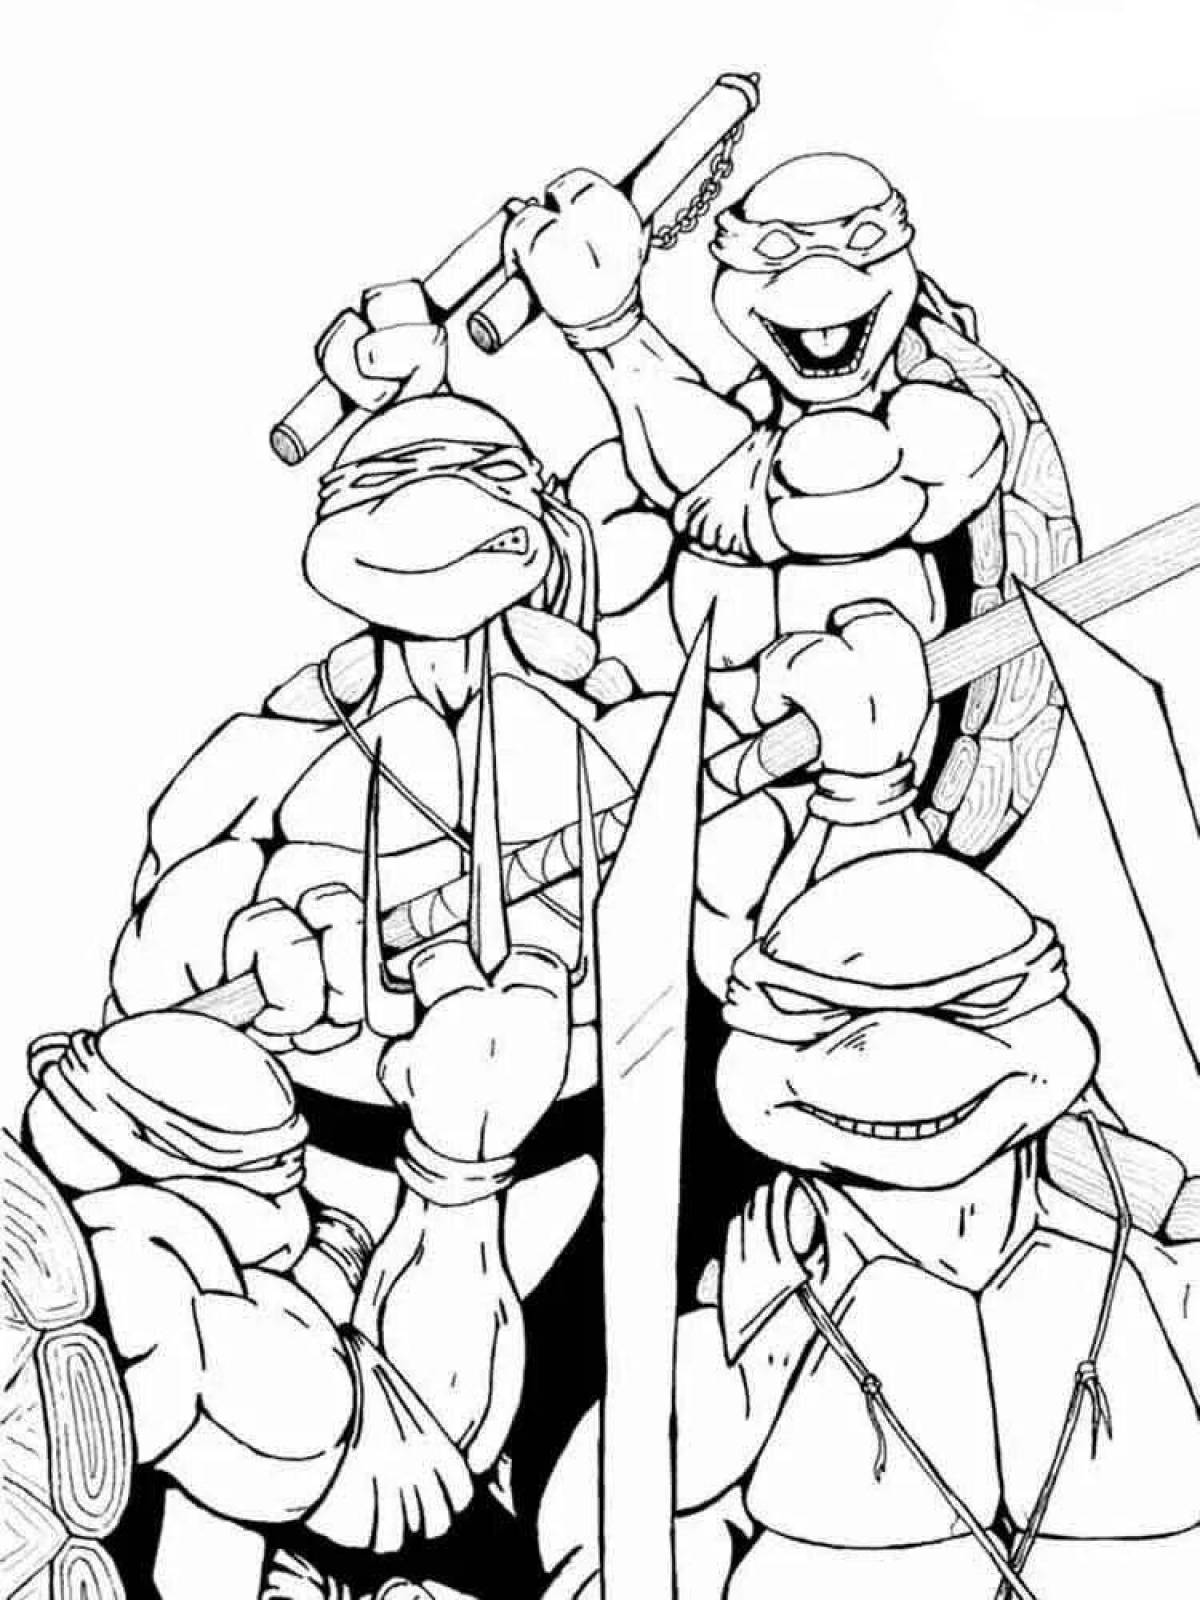 Rampant Teenage Mutant Ninja Turtles coloring book